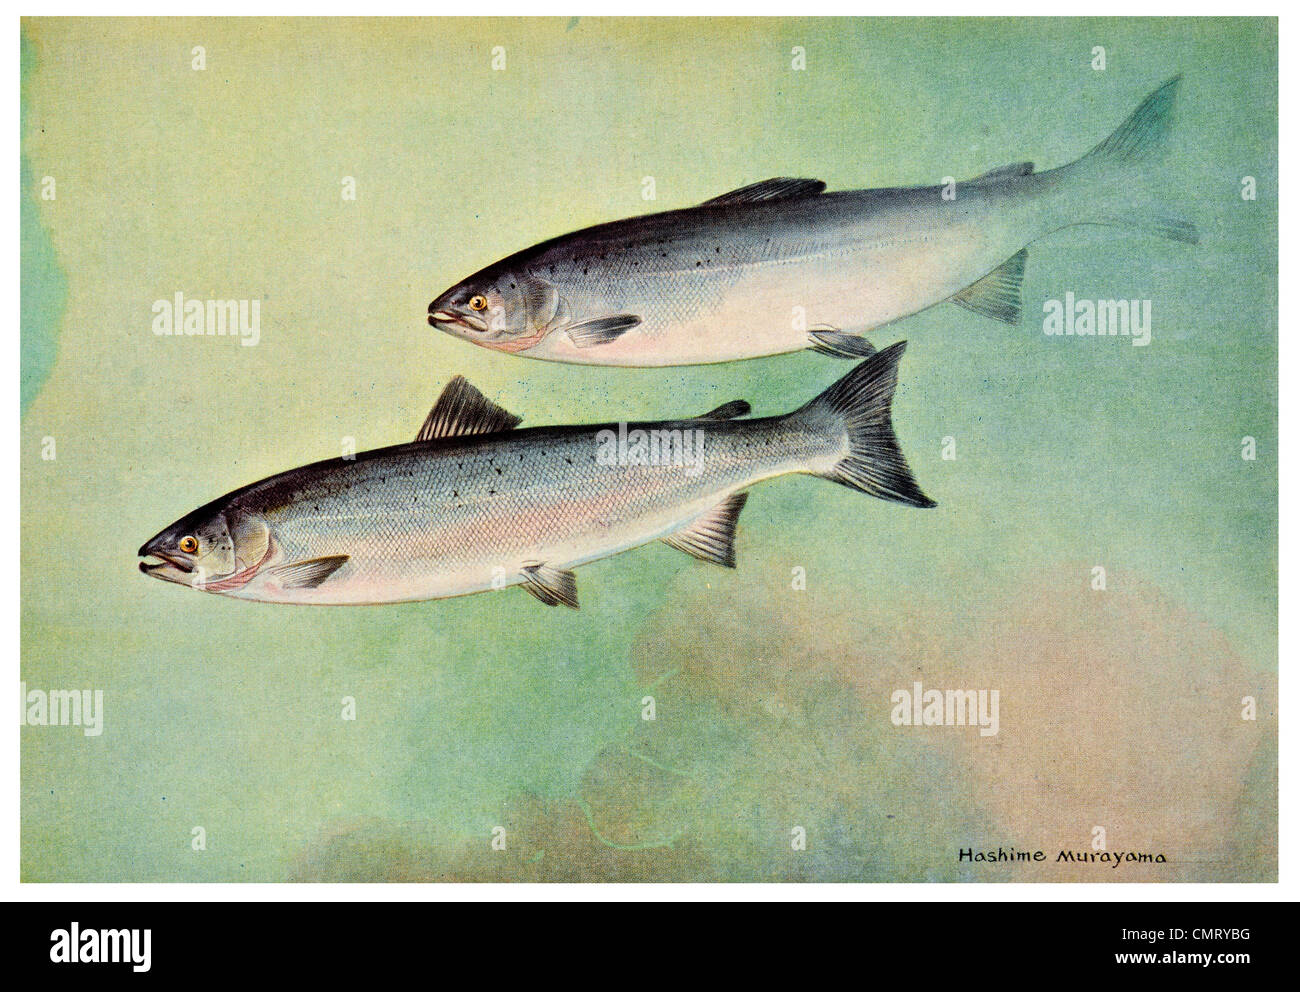 1923 Atlantic Salmon Salmo salar Stock Photo